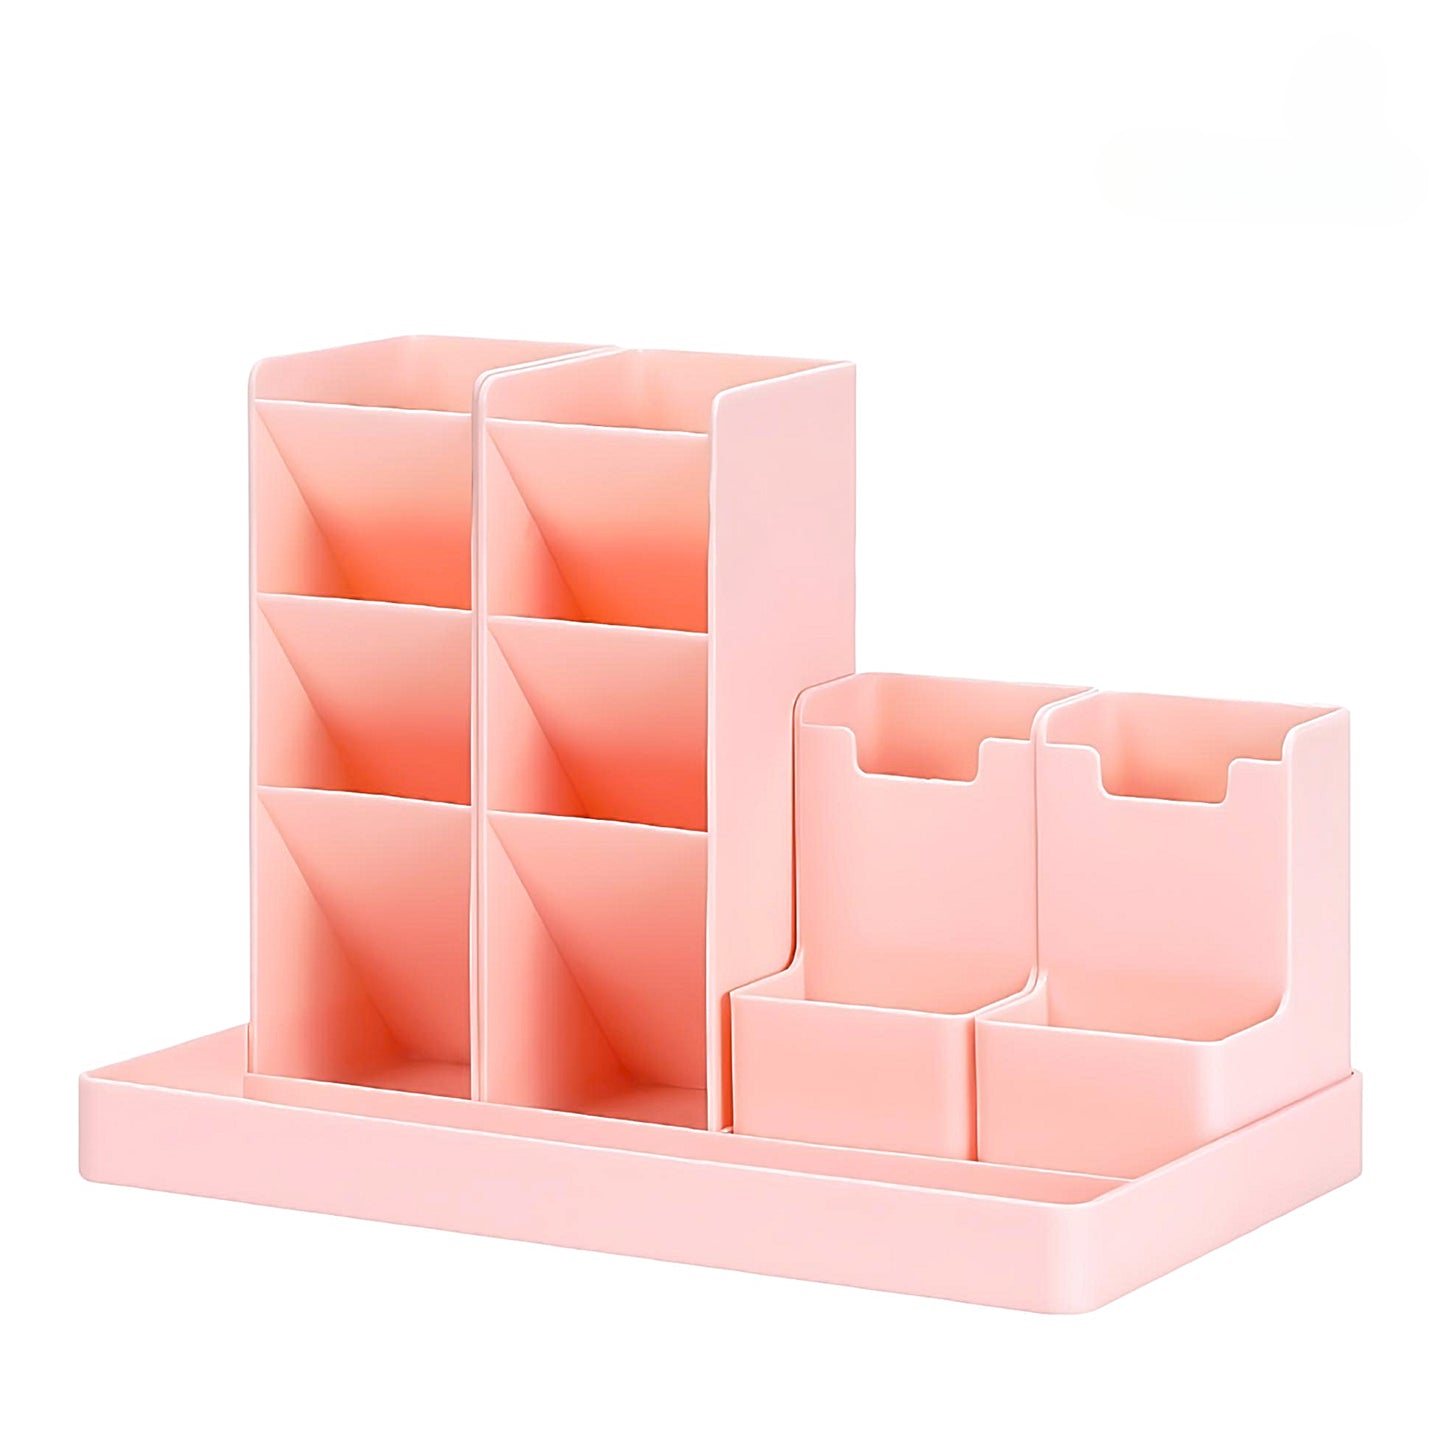 a pink modular desktop organizer on a white background